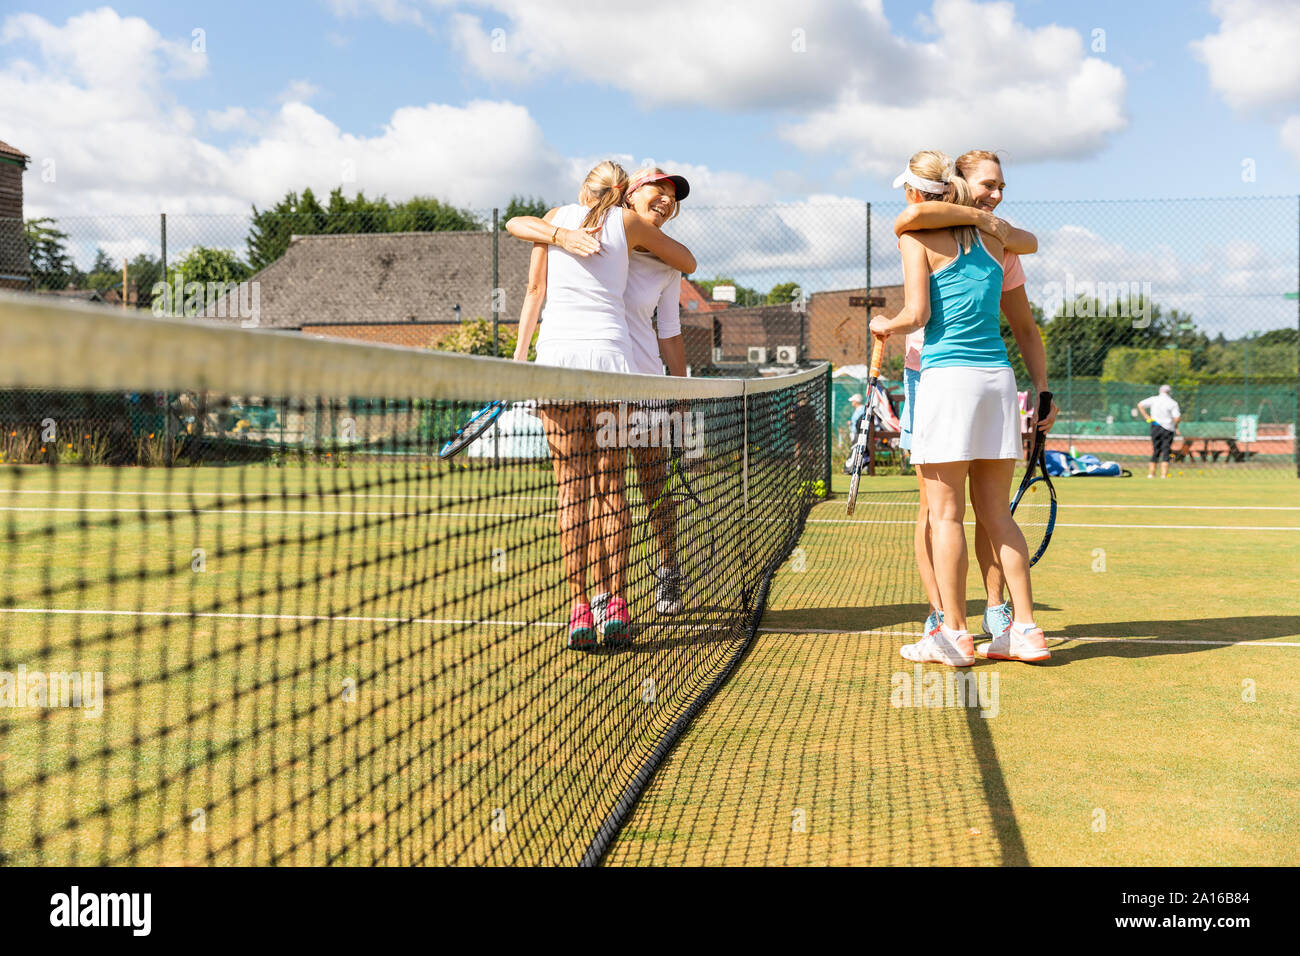 Mature women finishing tennis match on grass court hugging Stock Photo